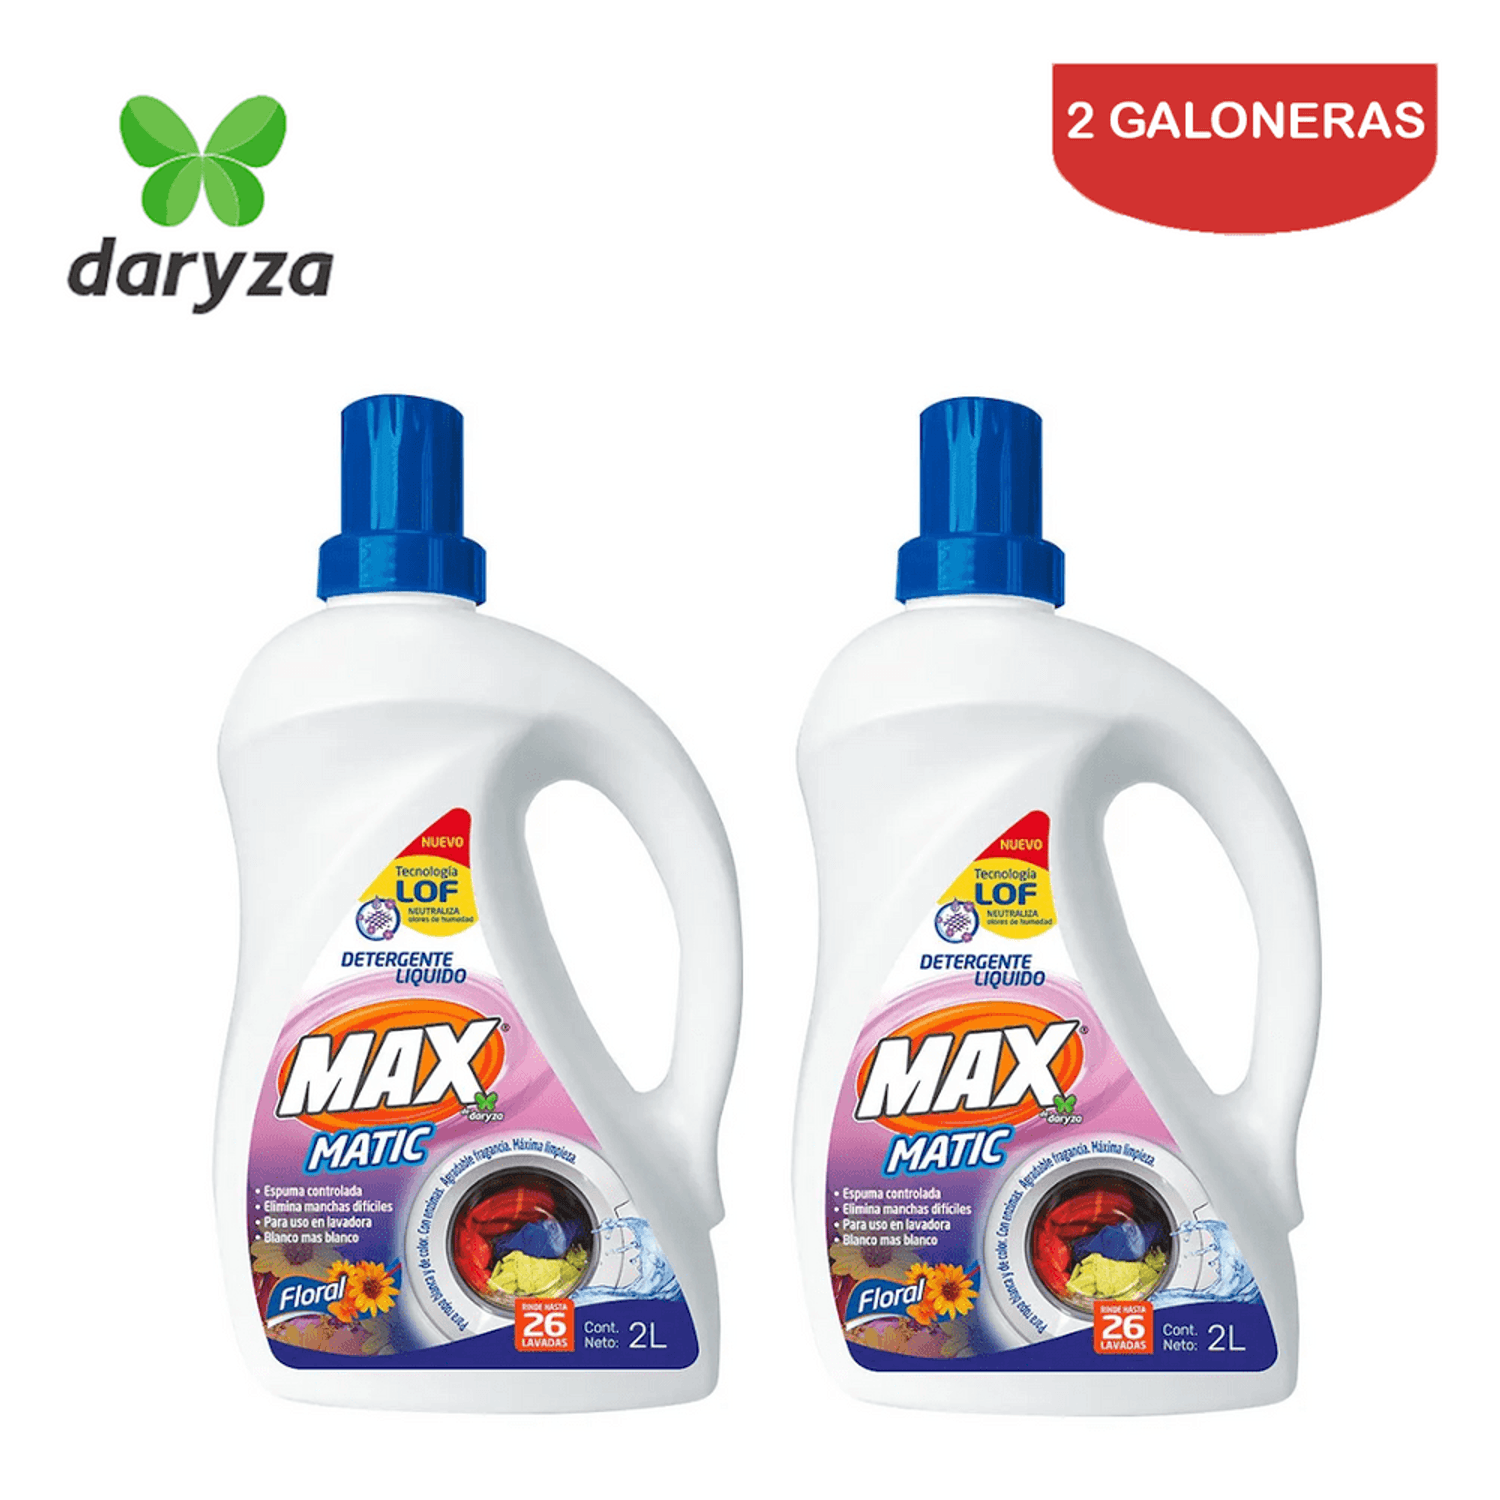 Detergente Líquido Concentrado Daryza Max Matic 2 Pack 2 Galoneras Oechsle - Oechsle